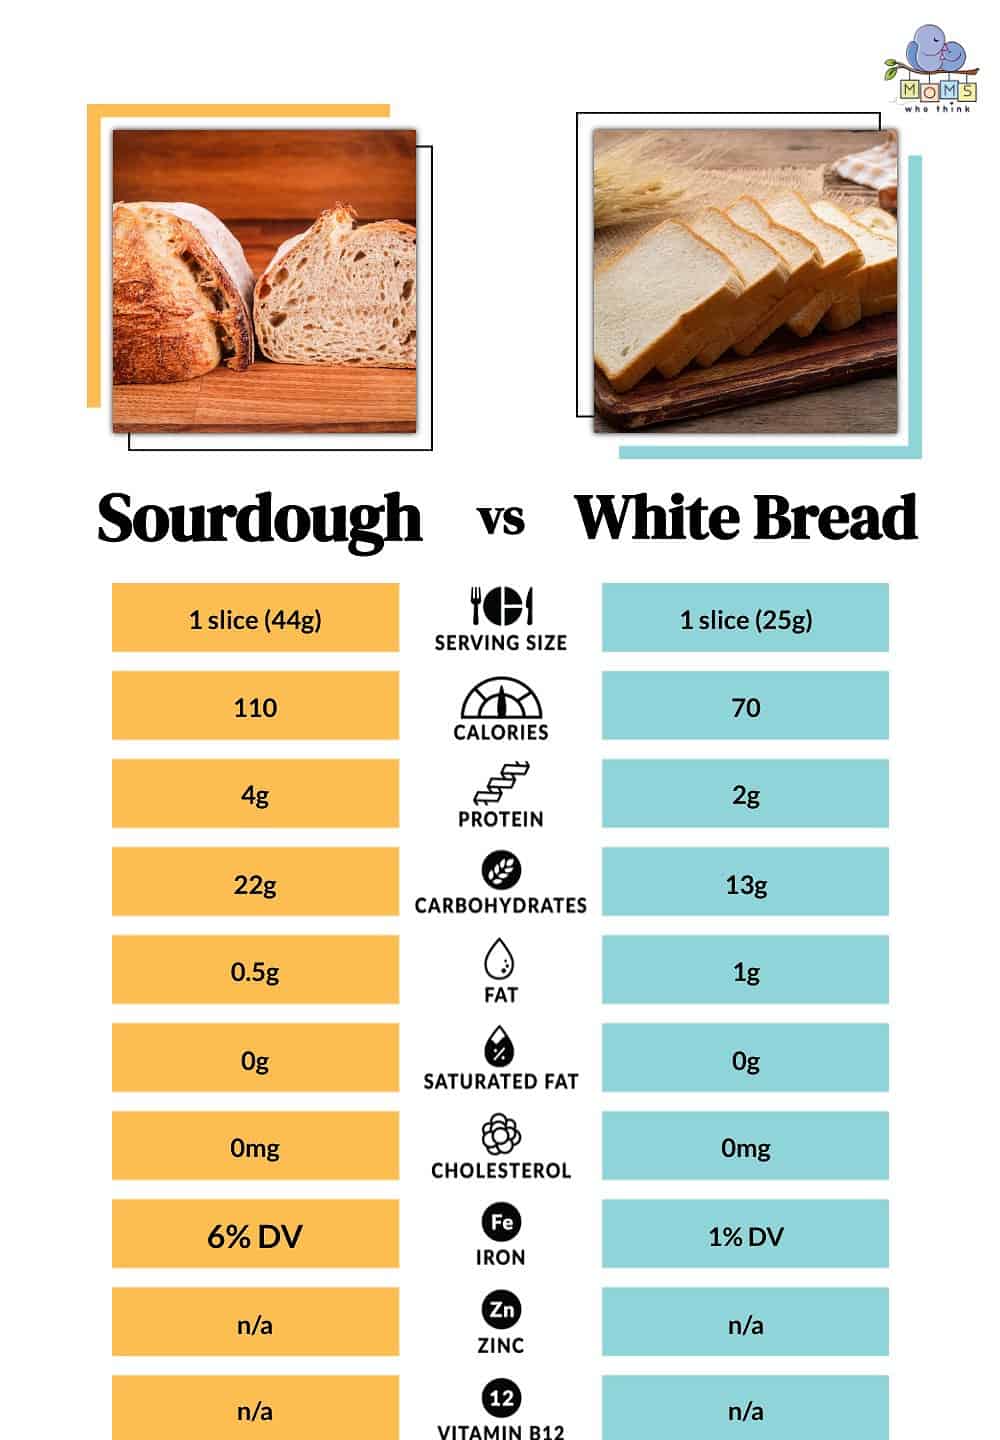 Sourdough vs White Bread Nutritional Facts